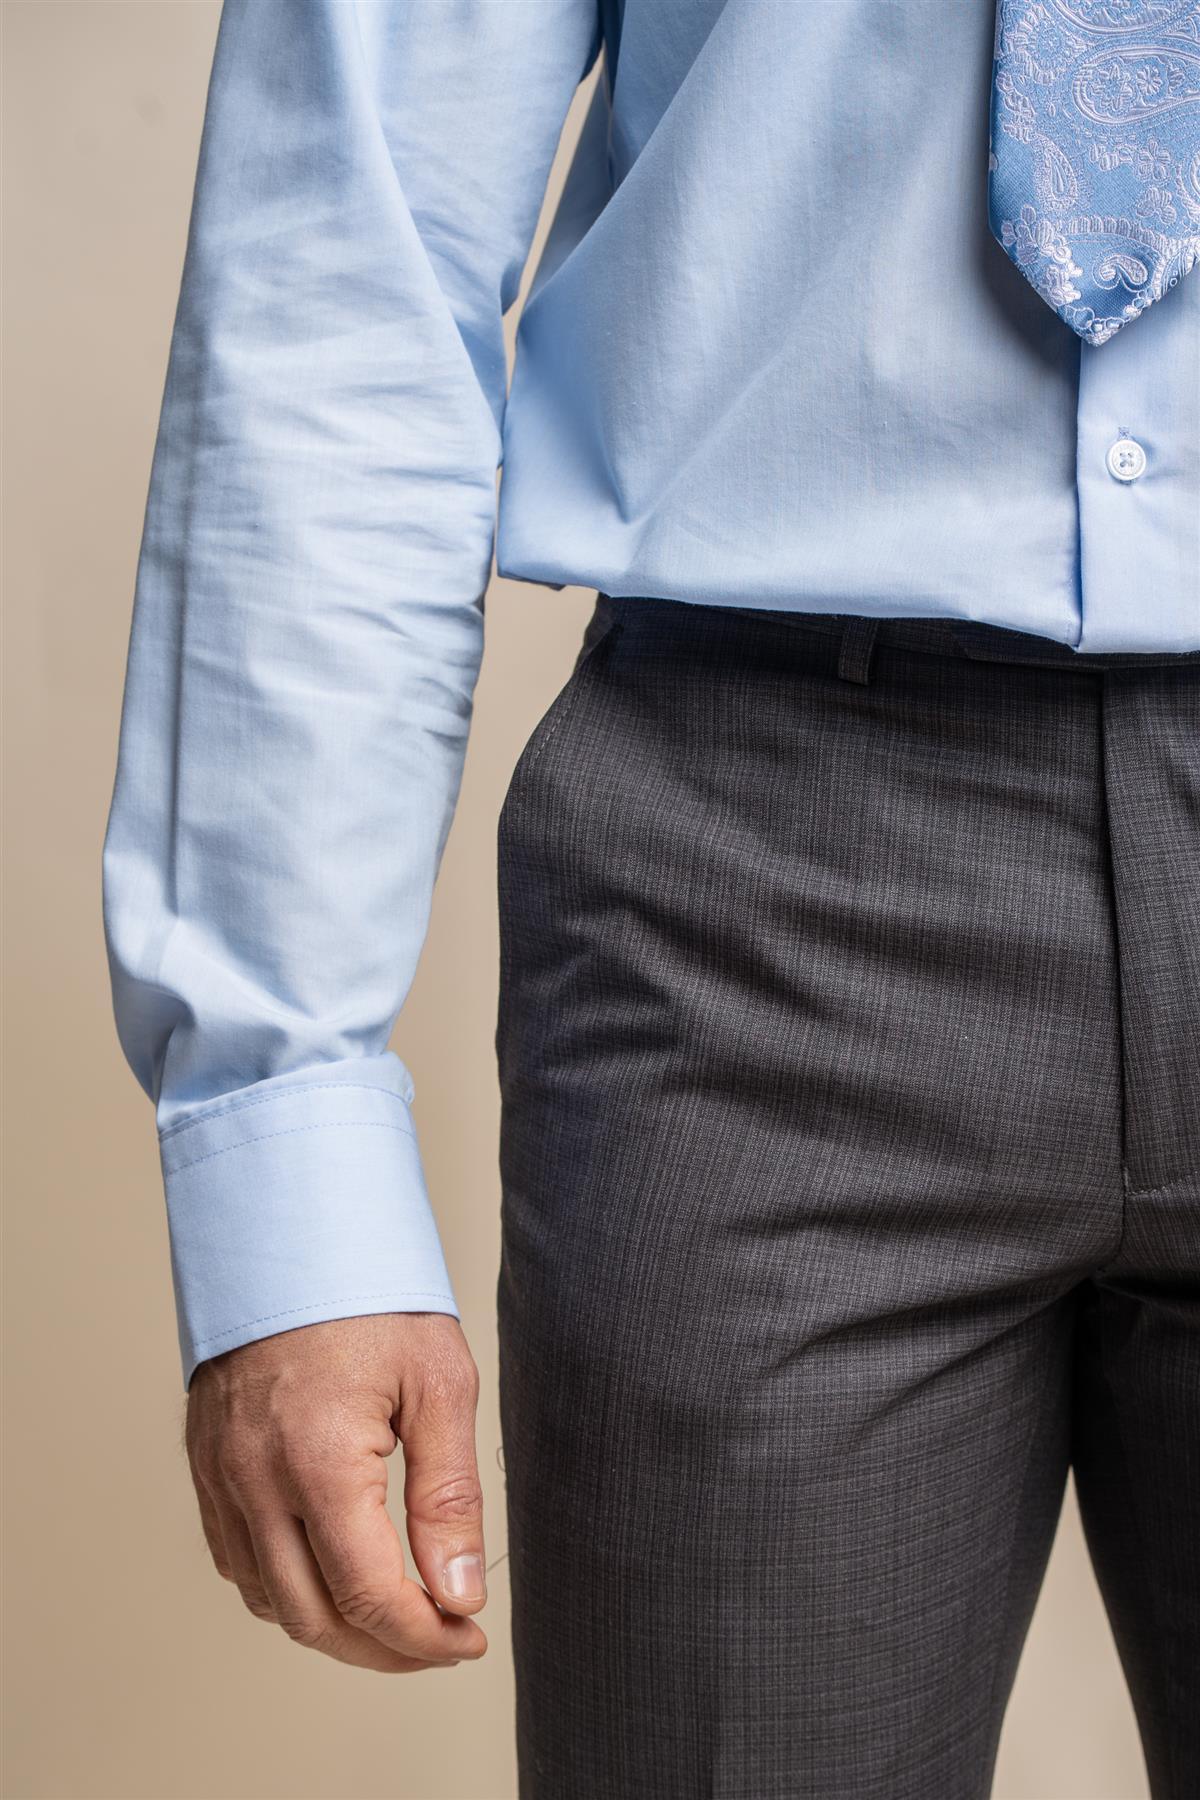 Seeba graphite trouser front detail